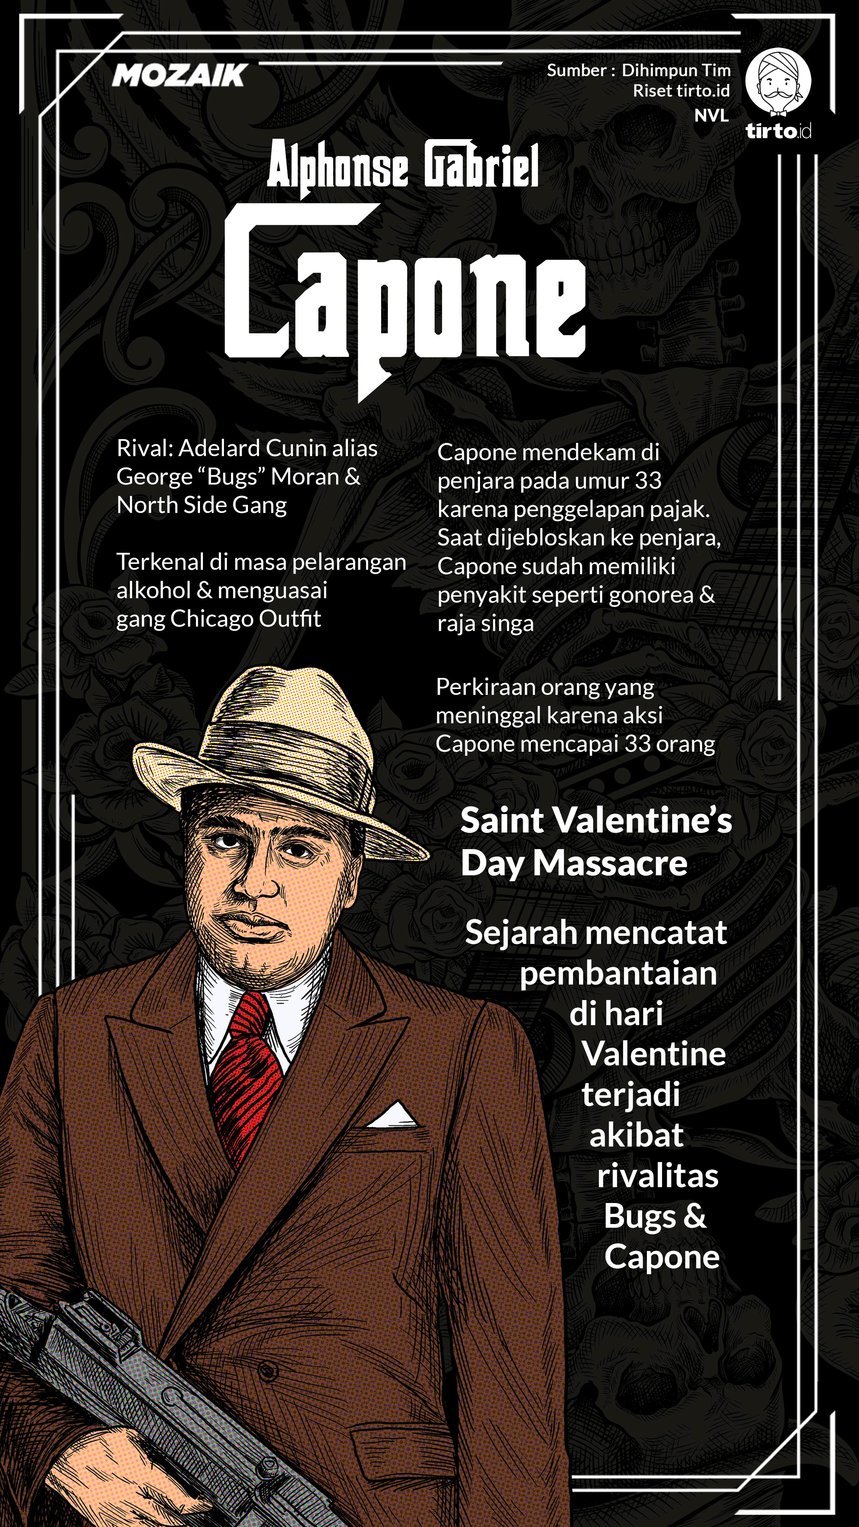 Infografik Mozaik Al Capone